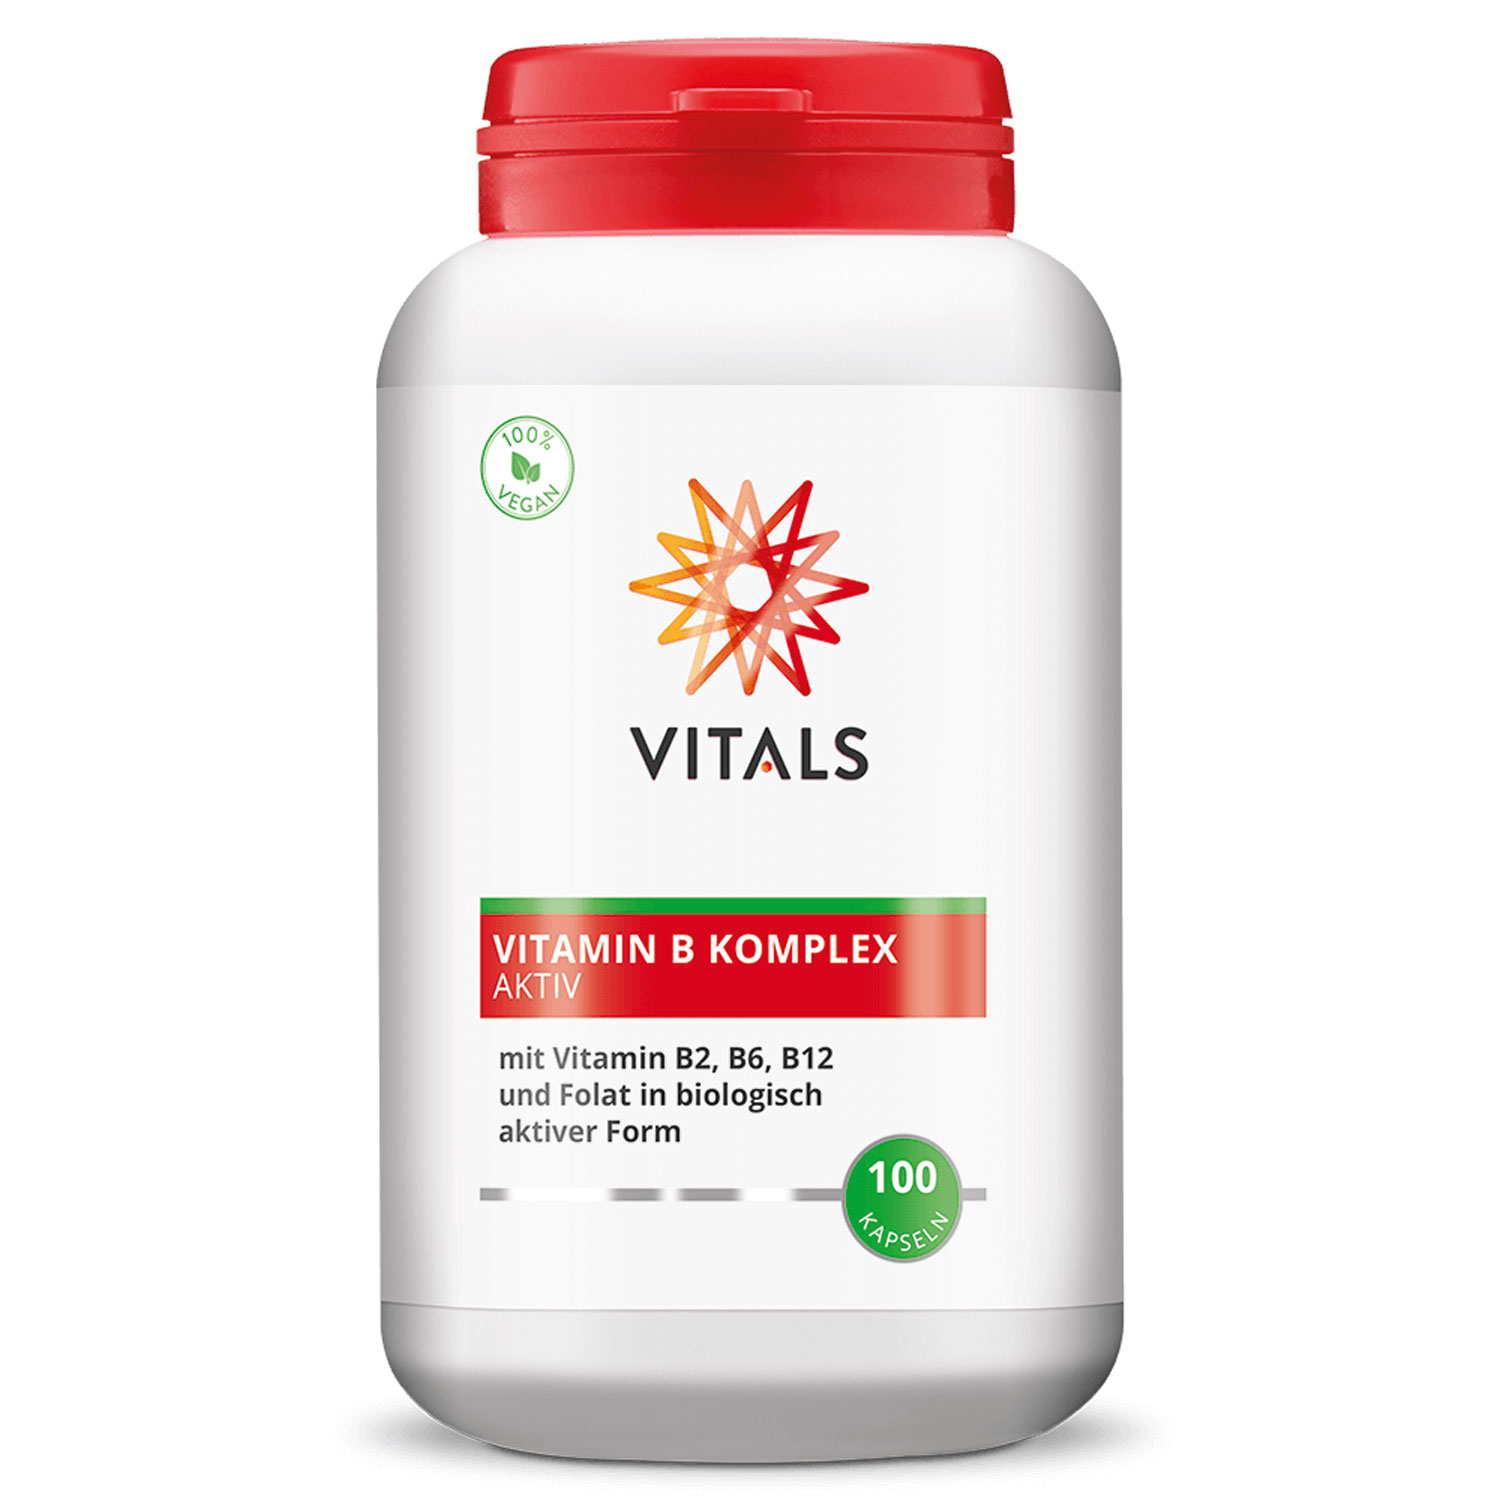 Vitamin B Komplex Aktiv von Vitals - 100 Kapseln